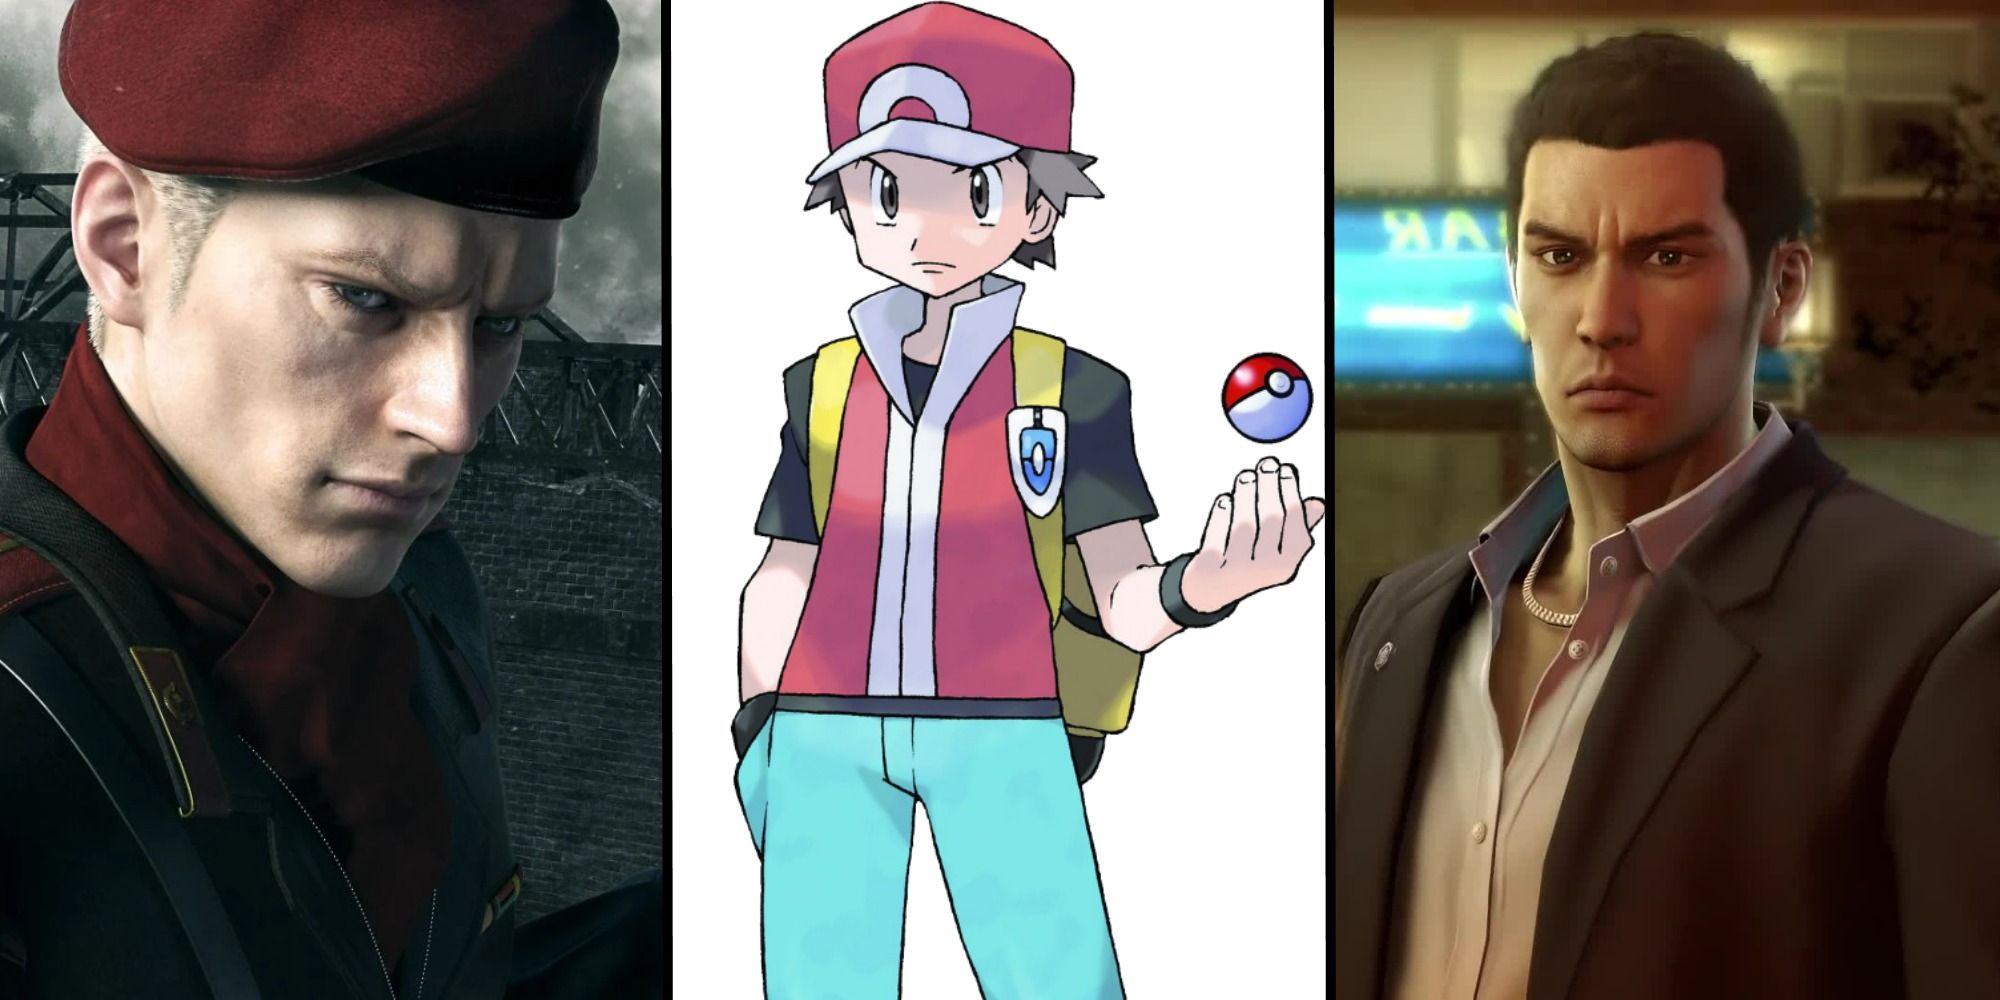 Strangest Careers feature image with Revolver Ocelot, Pokemon Trainer, and Kazuma Kiryu